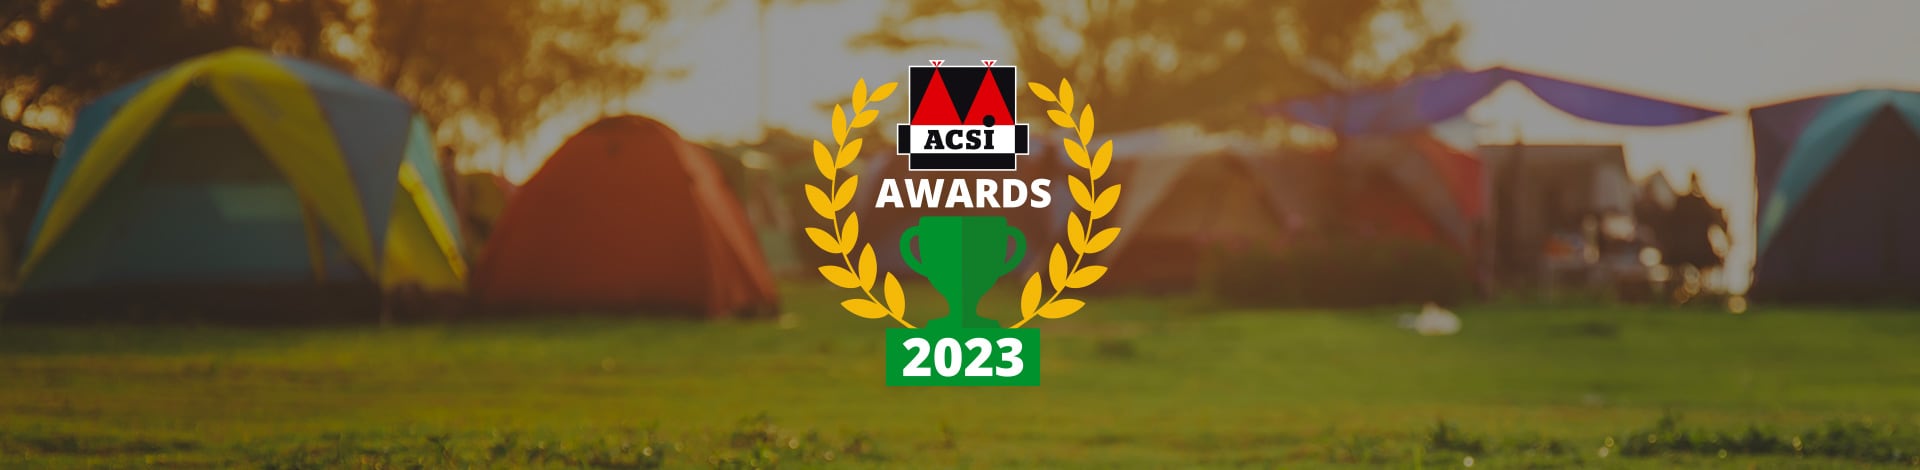 ACSI Awards 2023 | Vote for you favorite campsite